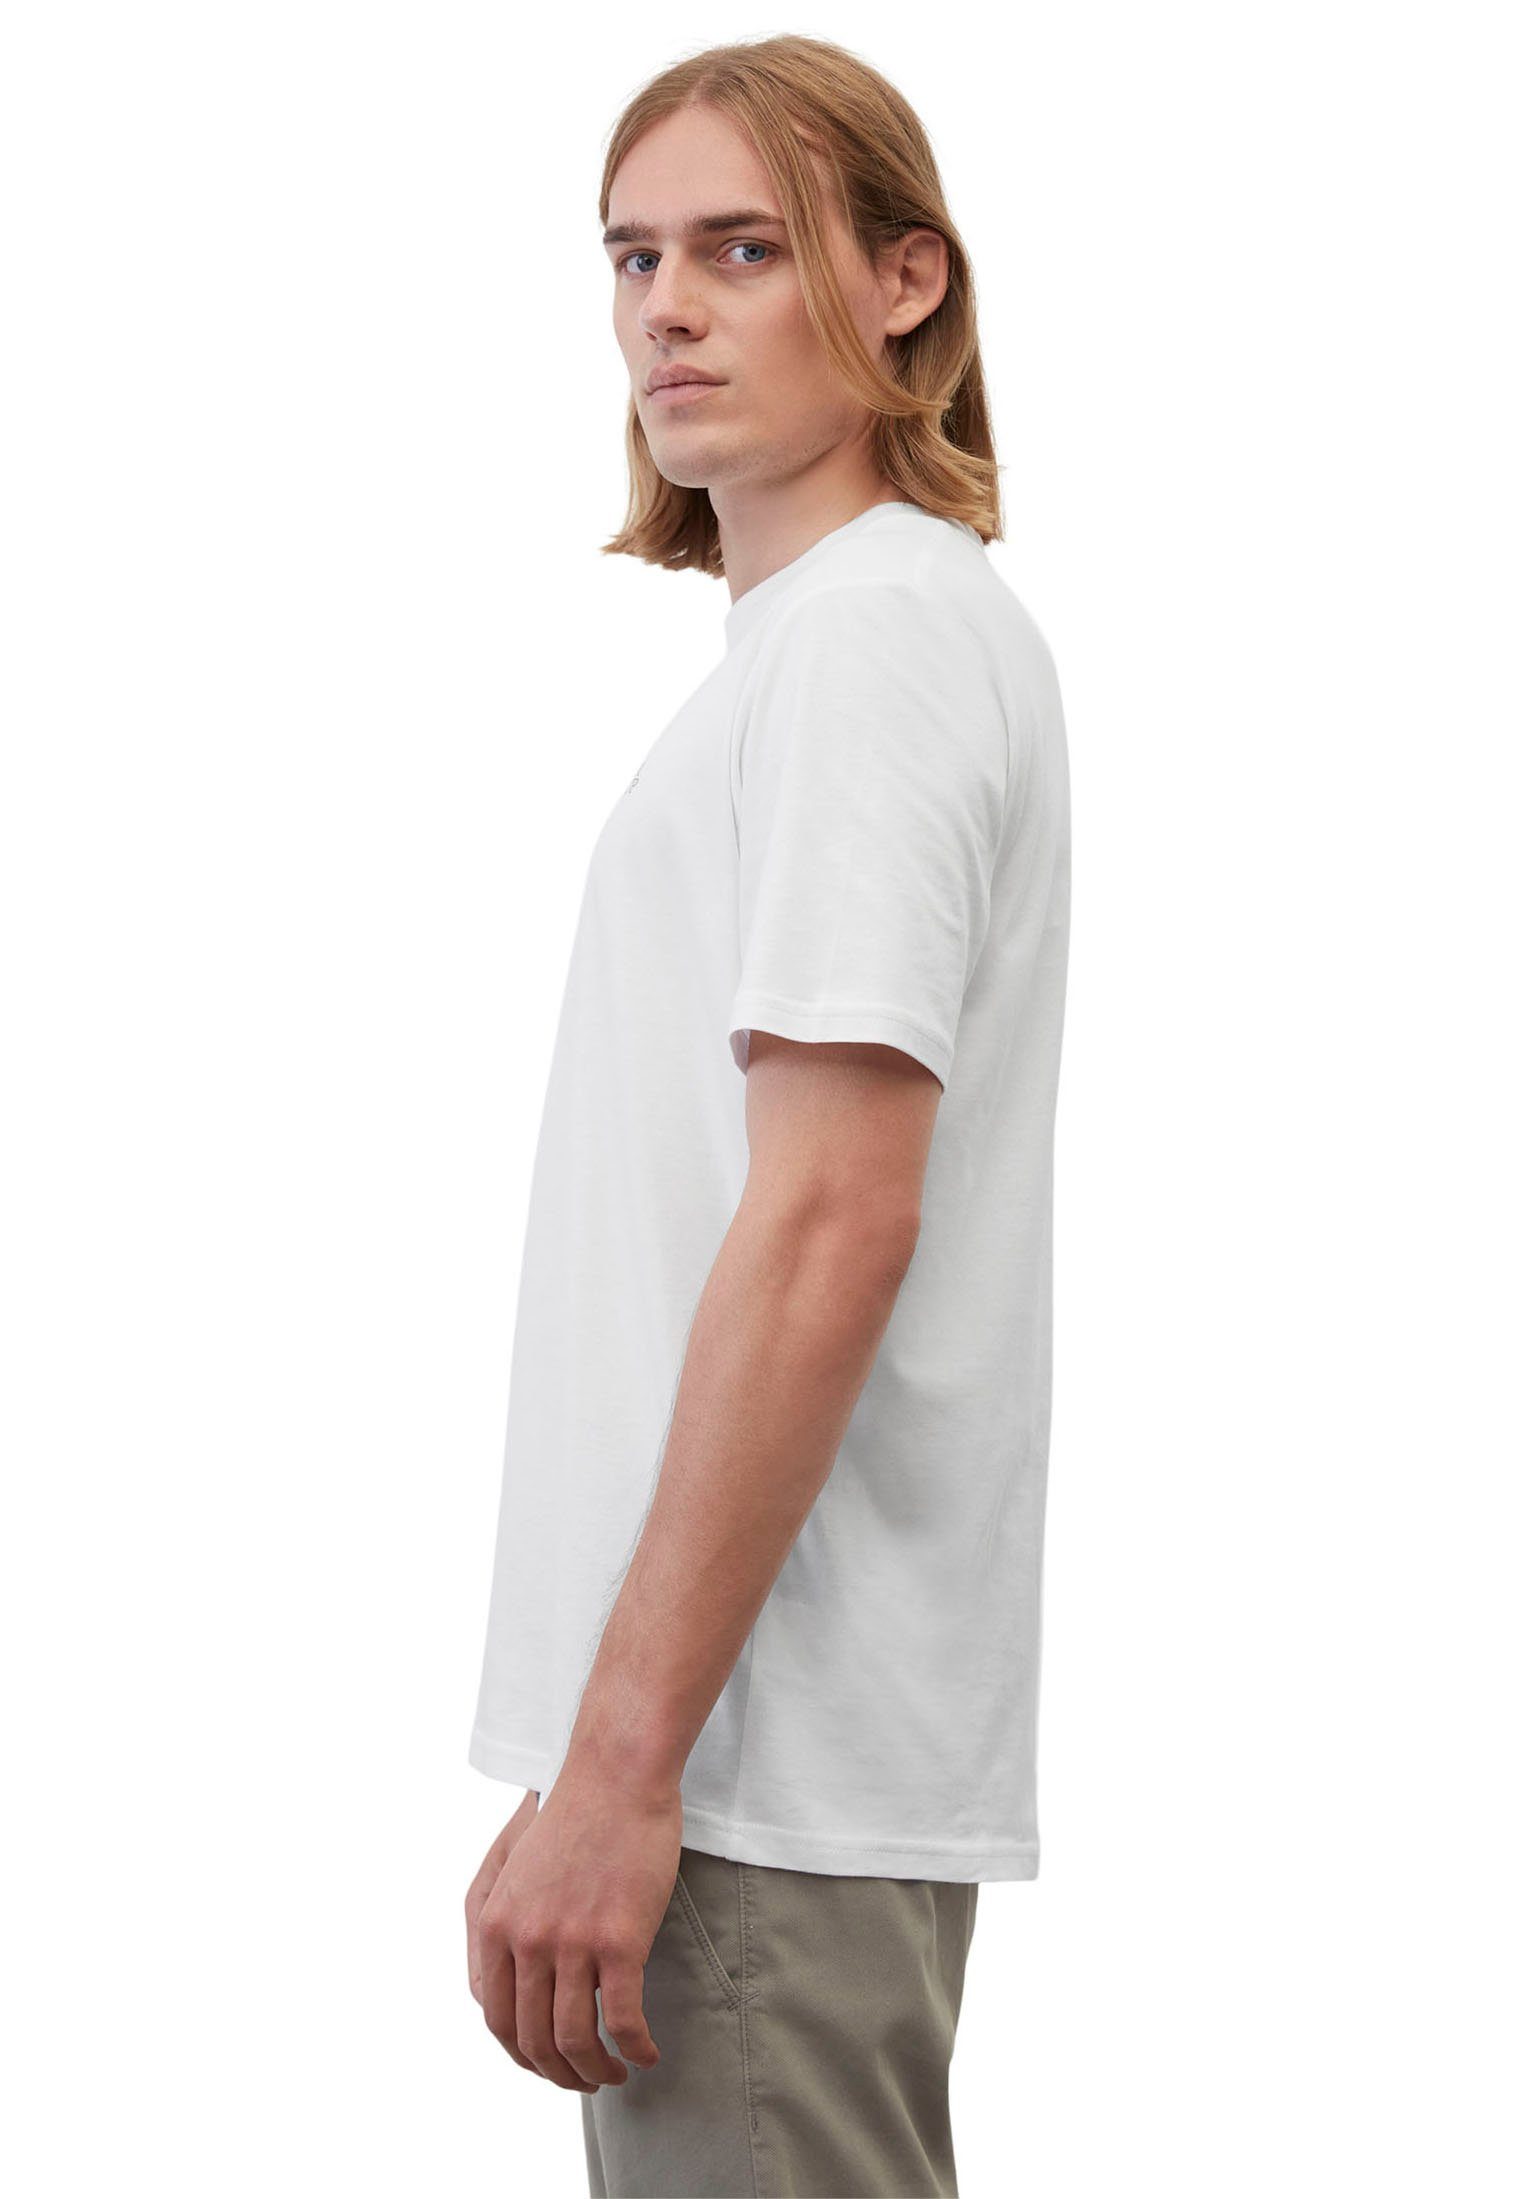 Marc O'Polo T-Shirt weiß Logo-T-Shirt Bio-Baumwolle aus